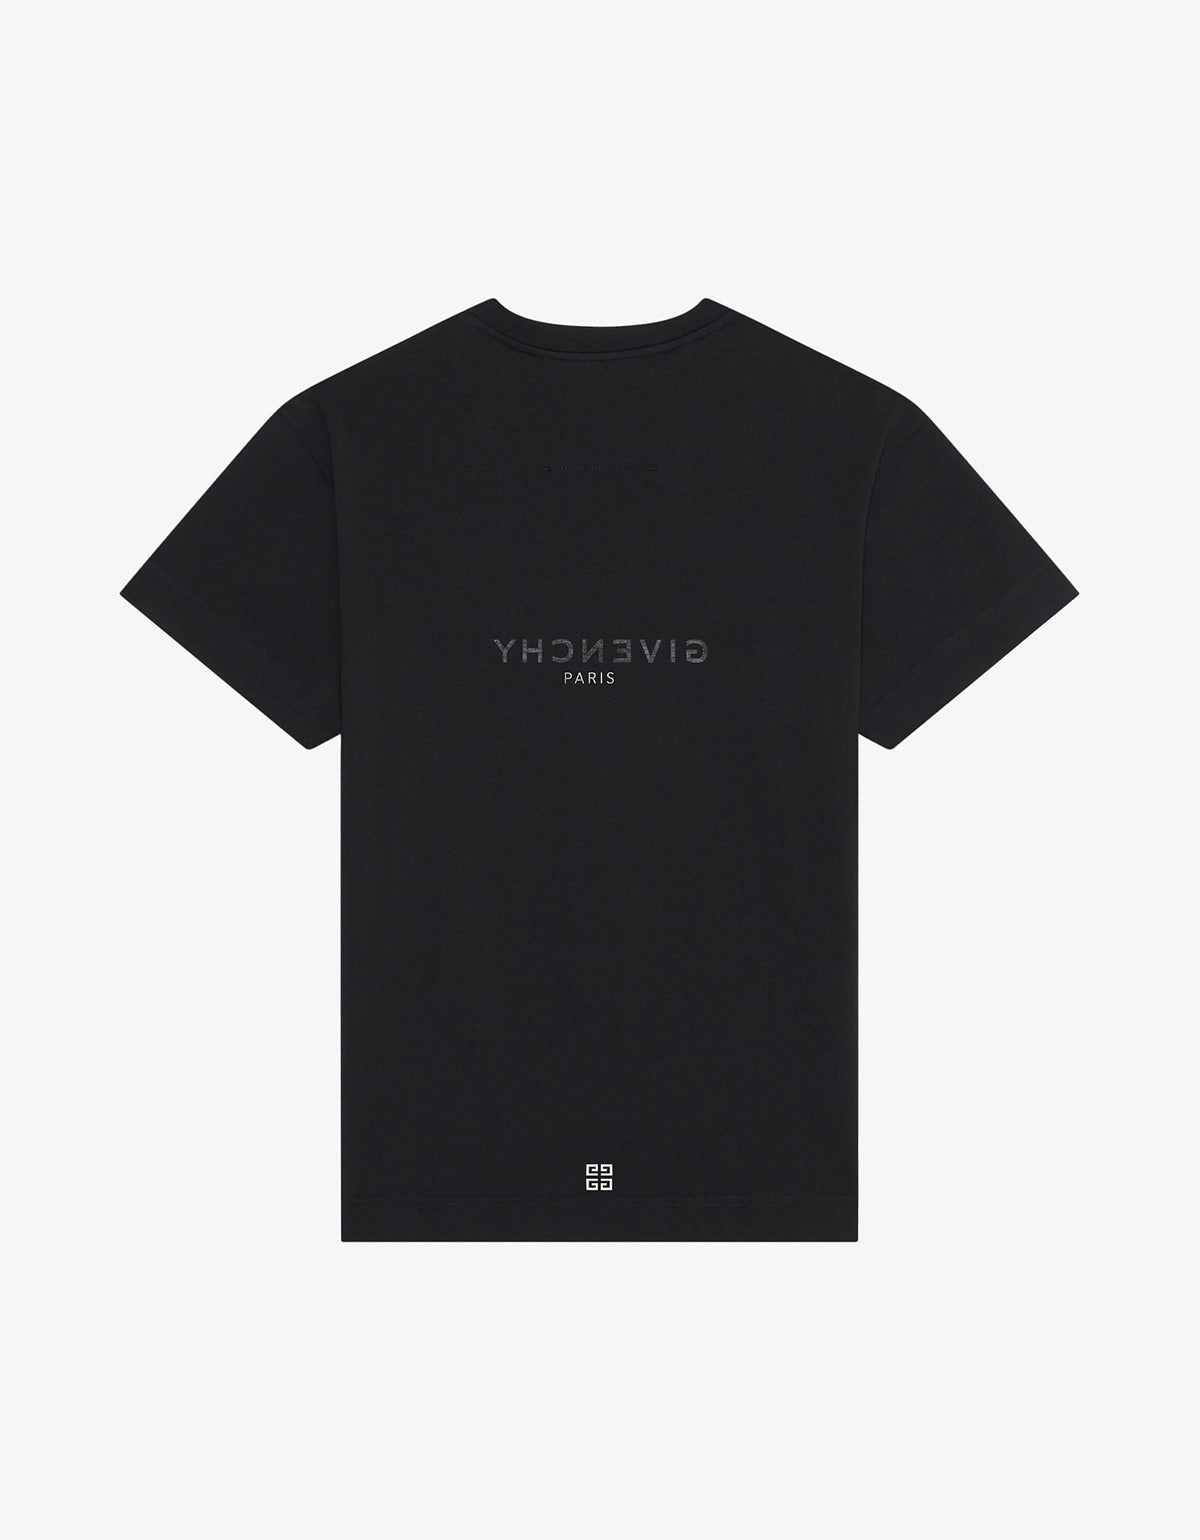 Givenchy Black Reverse Logo Slim T-Shirt